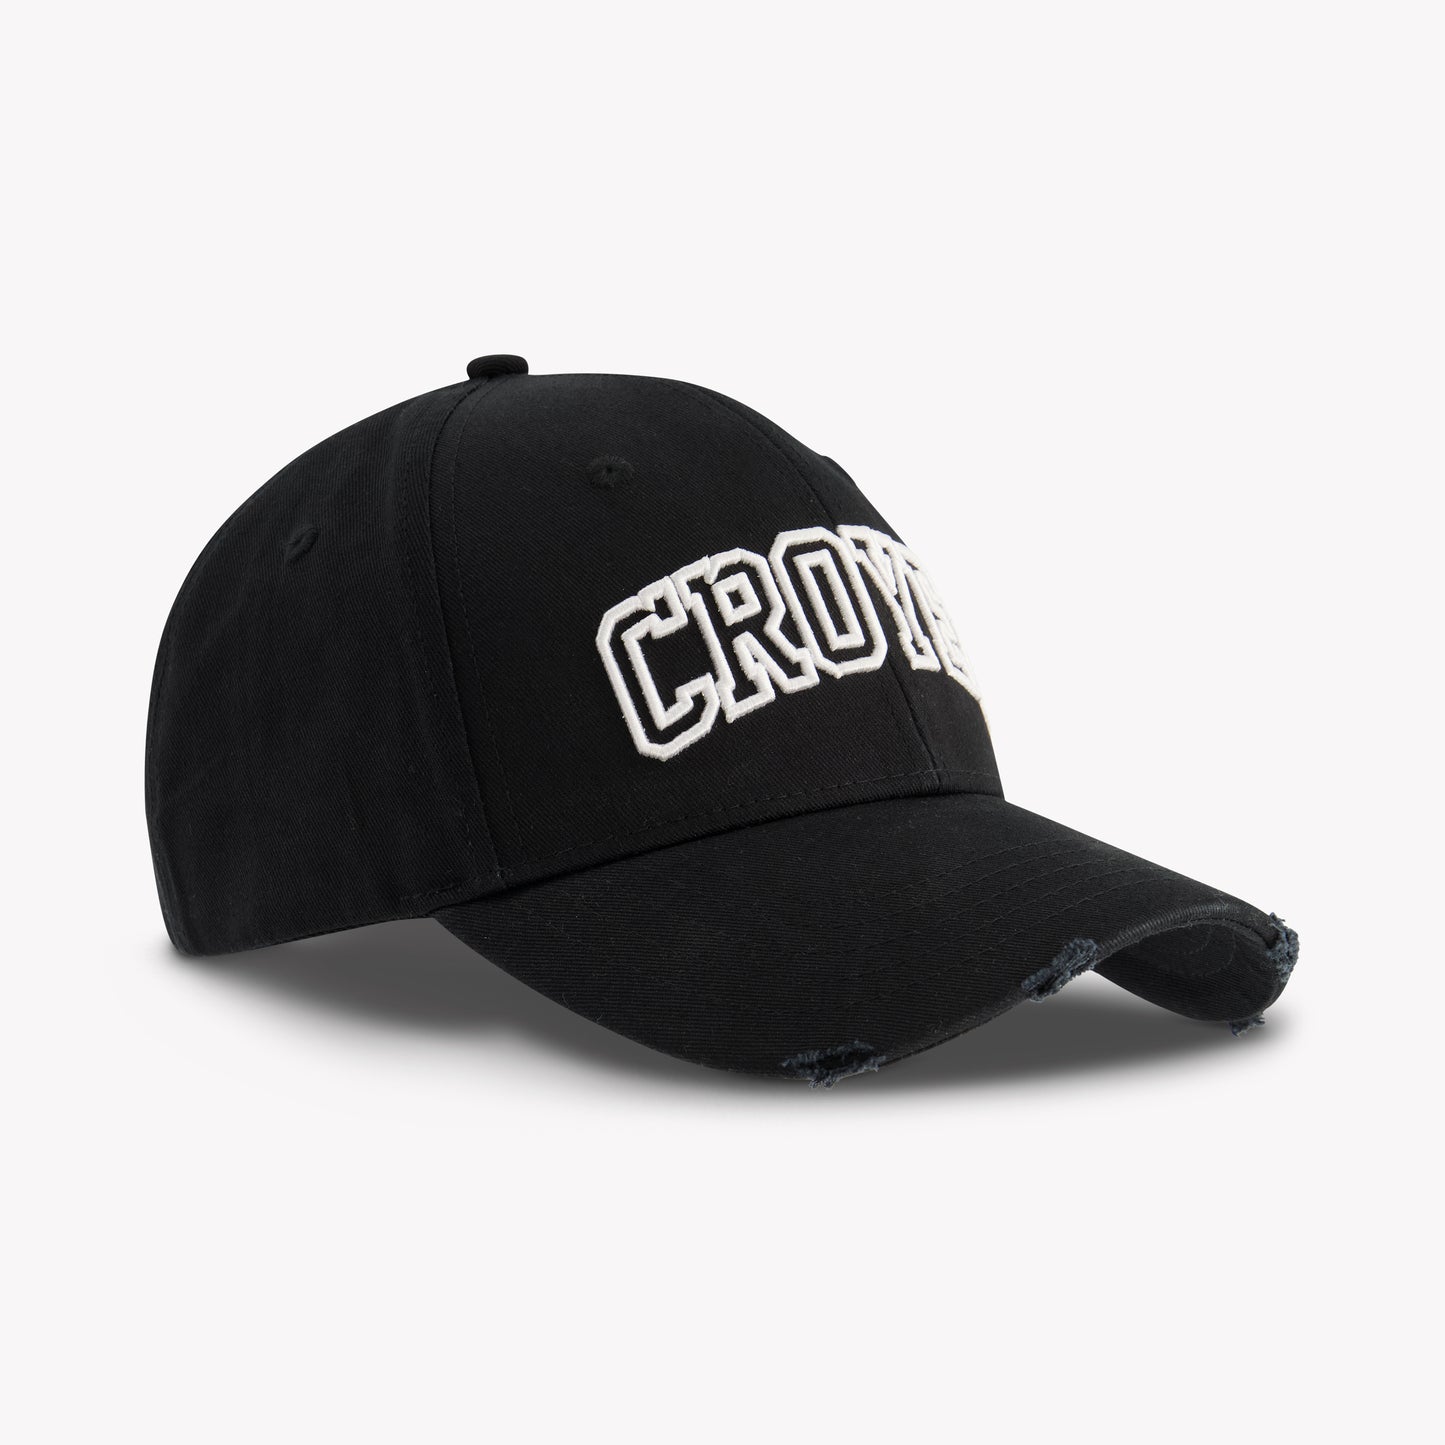 CROYEZ LOGO CAP - BLACK/WHITE